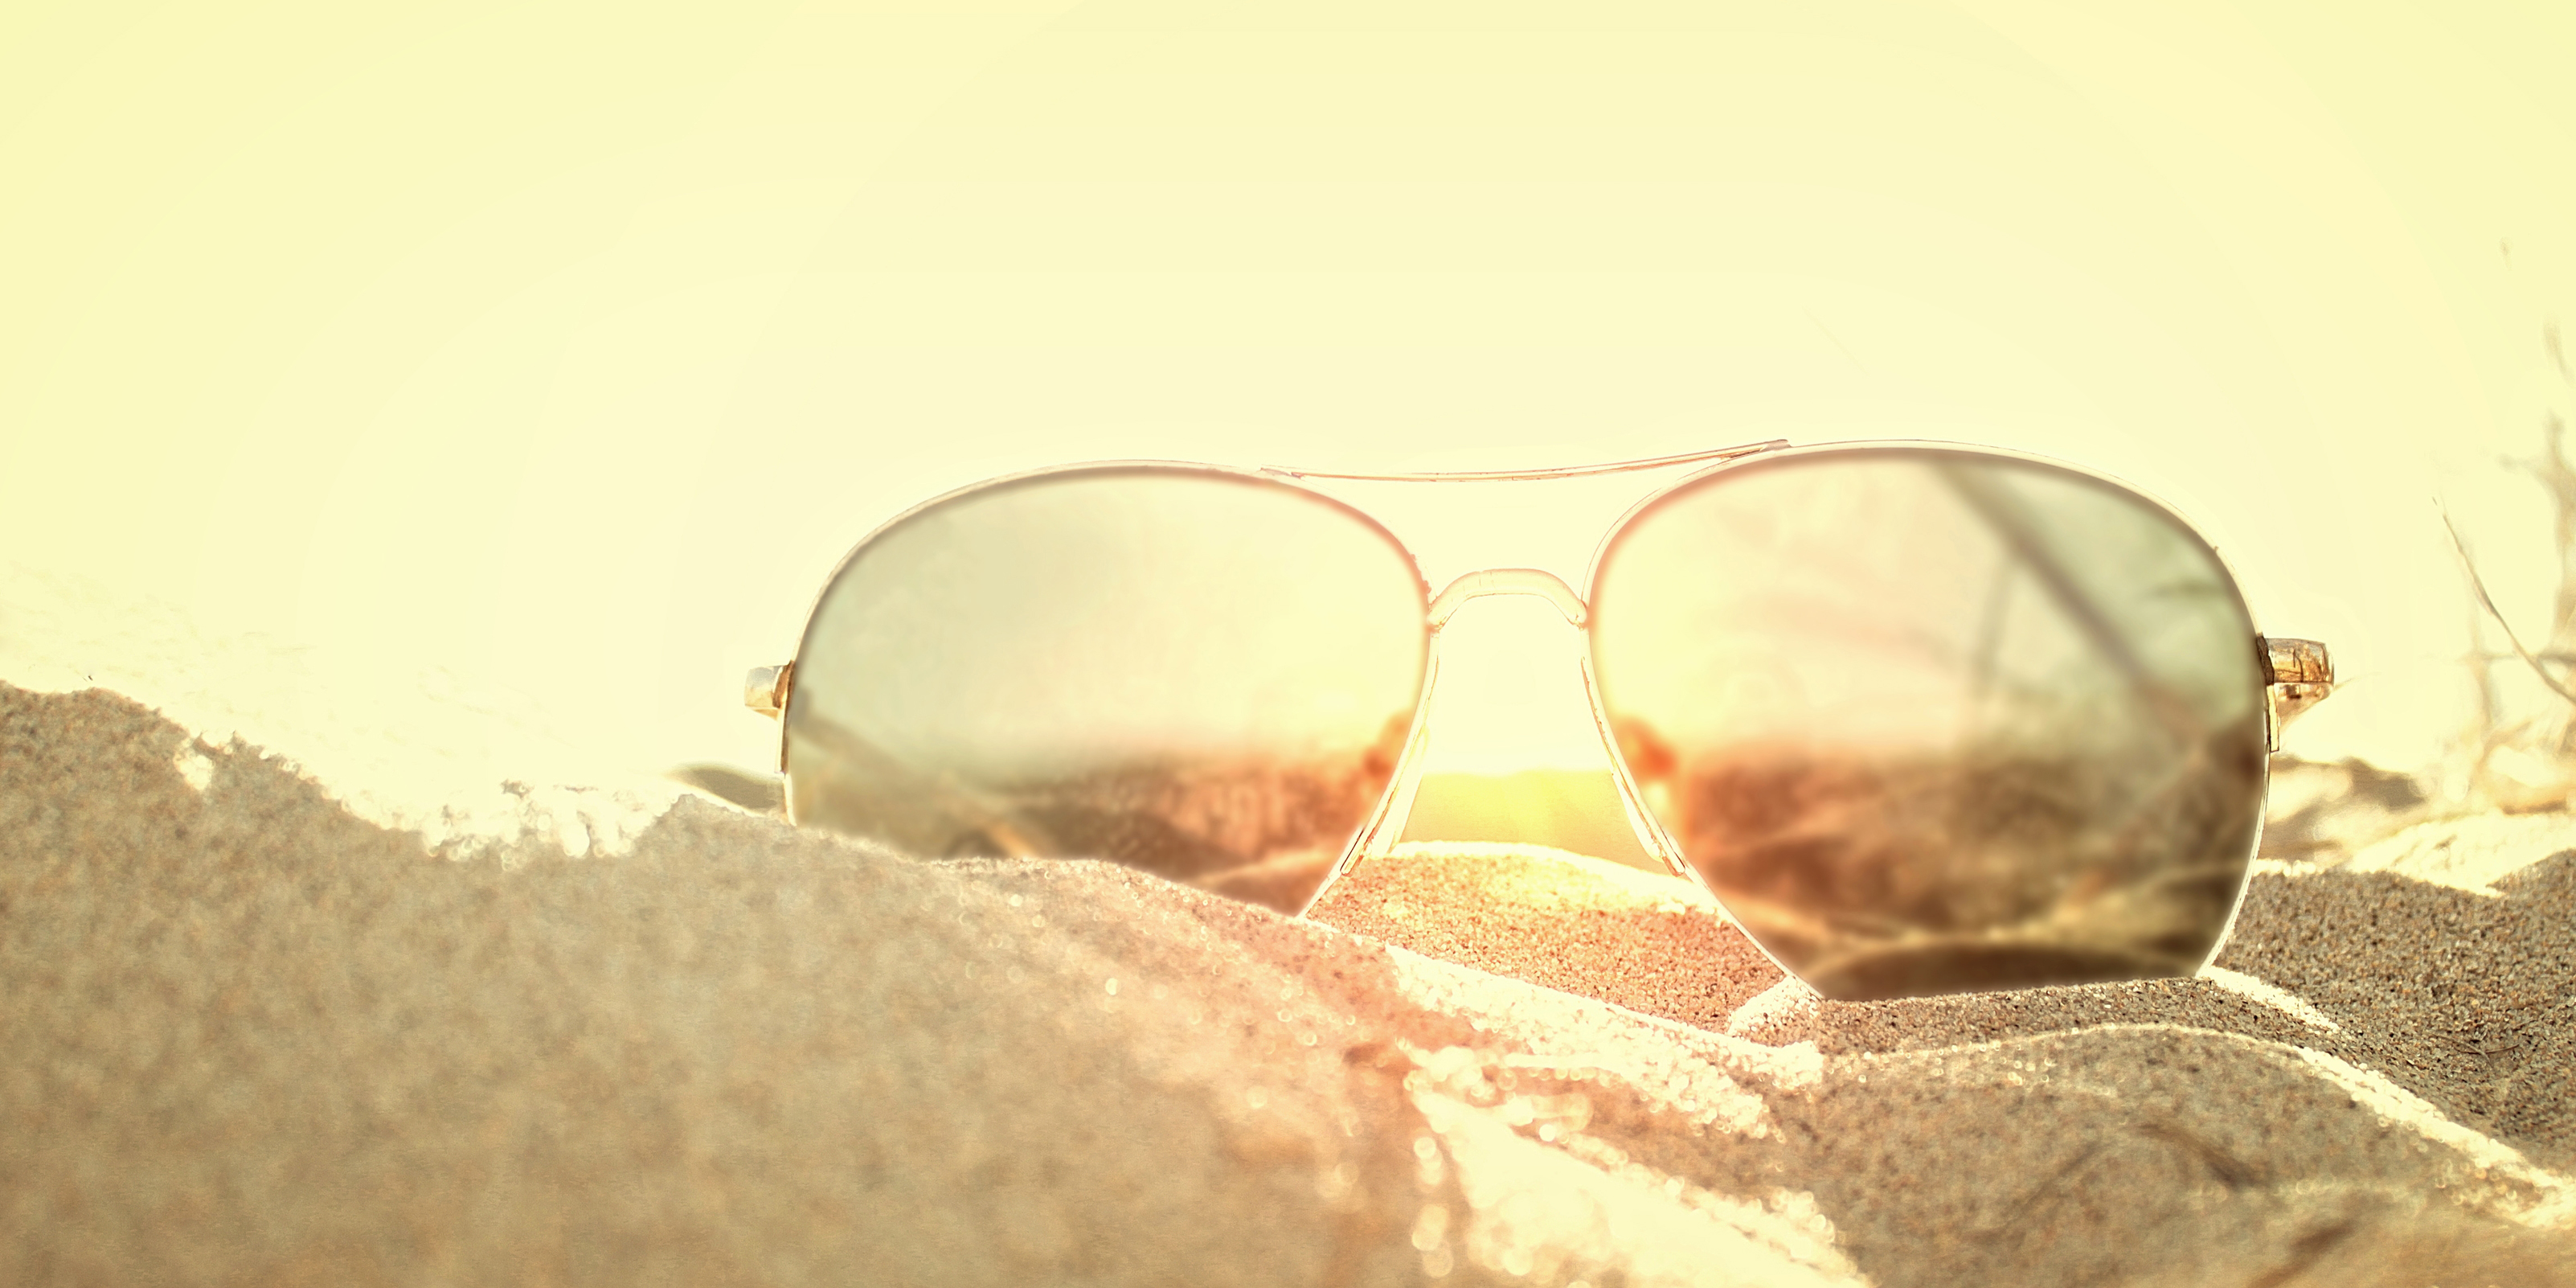 Sunglasses on the sand at sunse photo